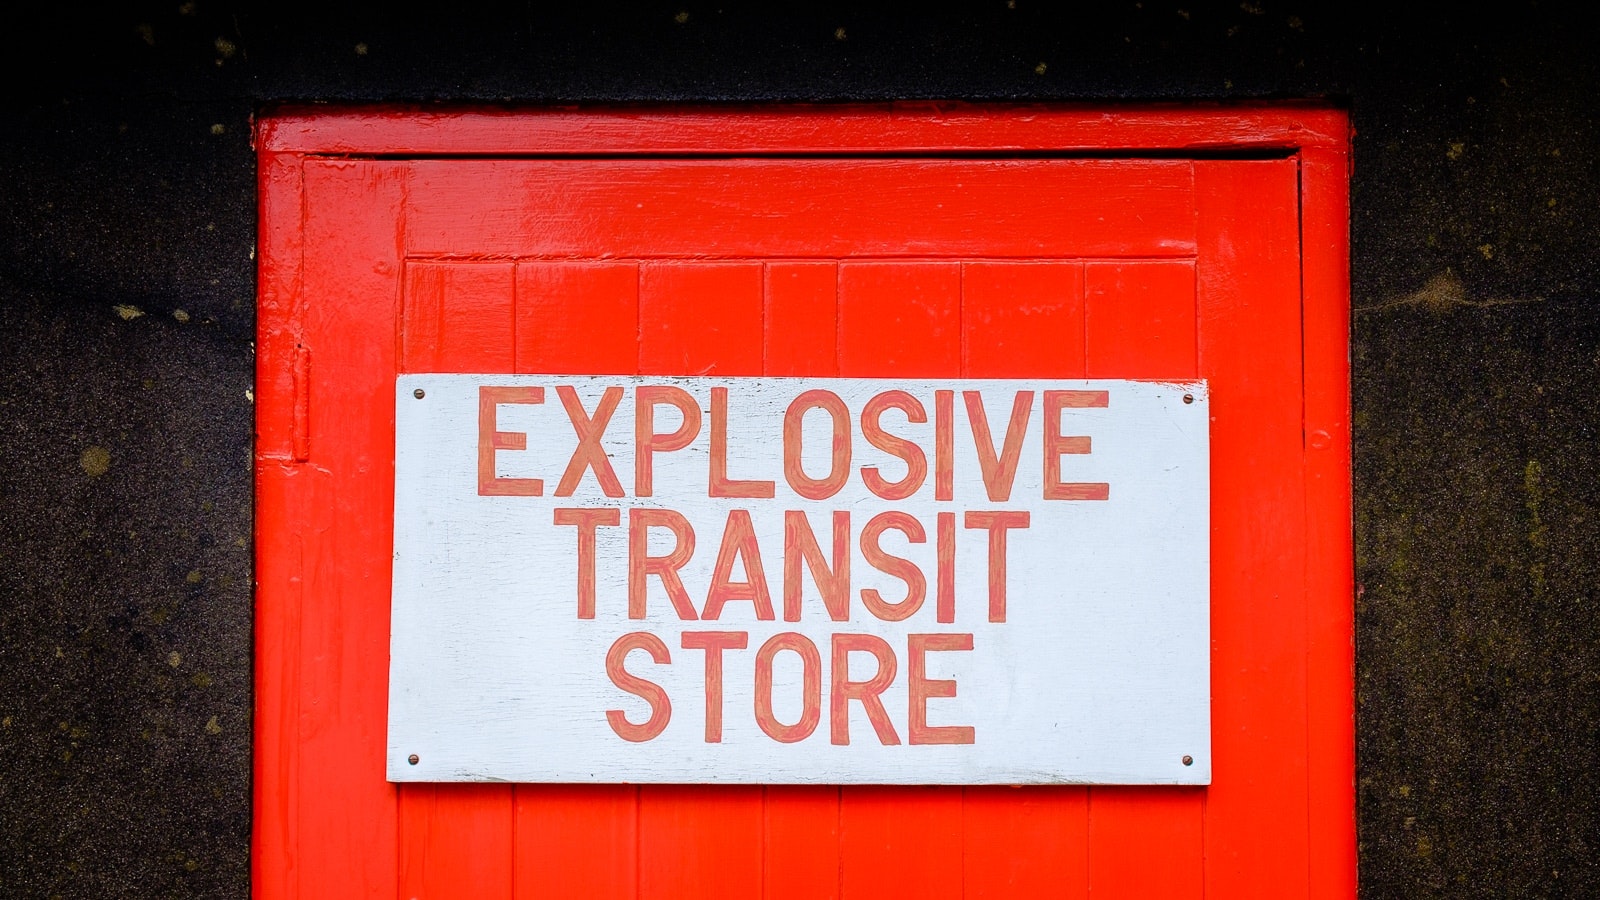 Explosive transit store